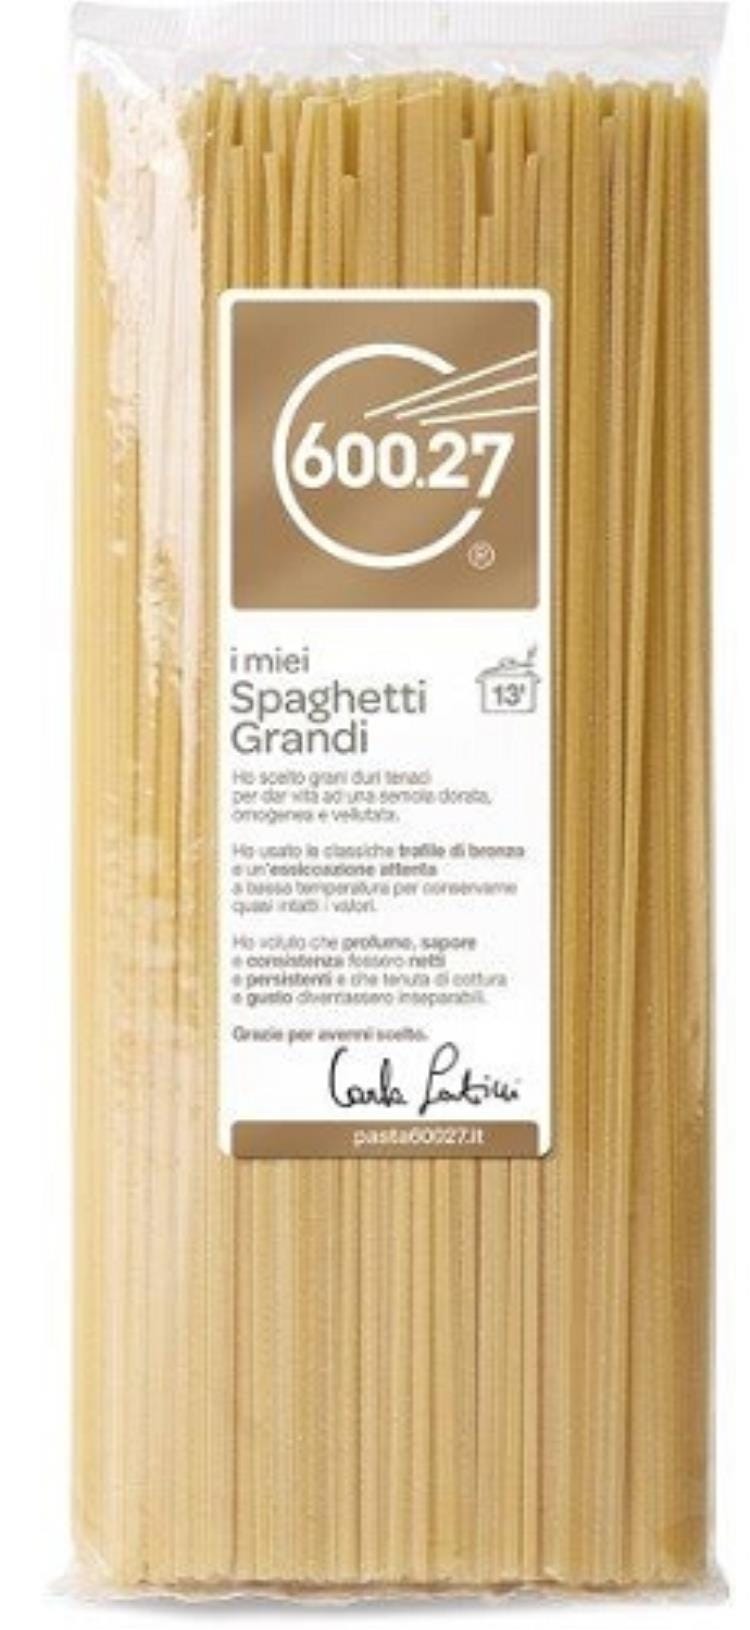 01 Spaghetti Grandi